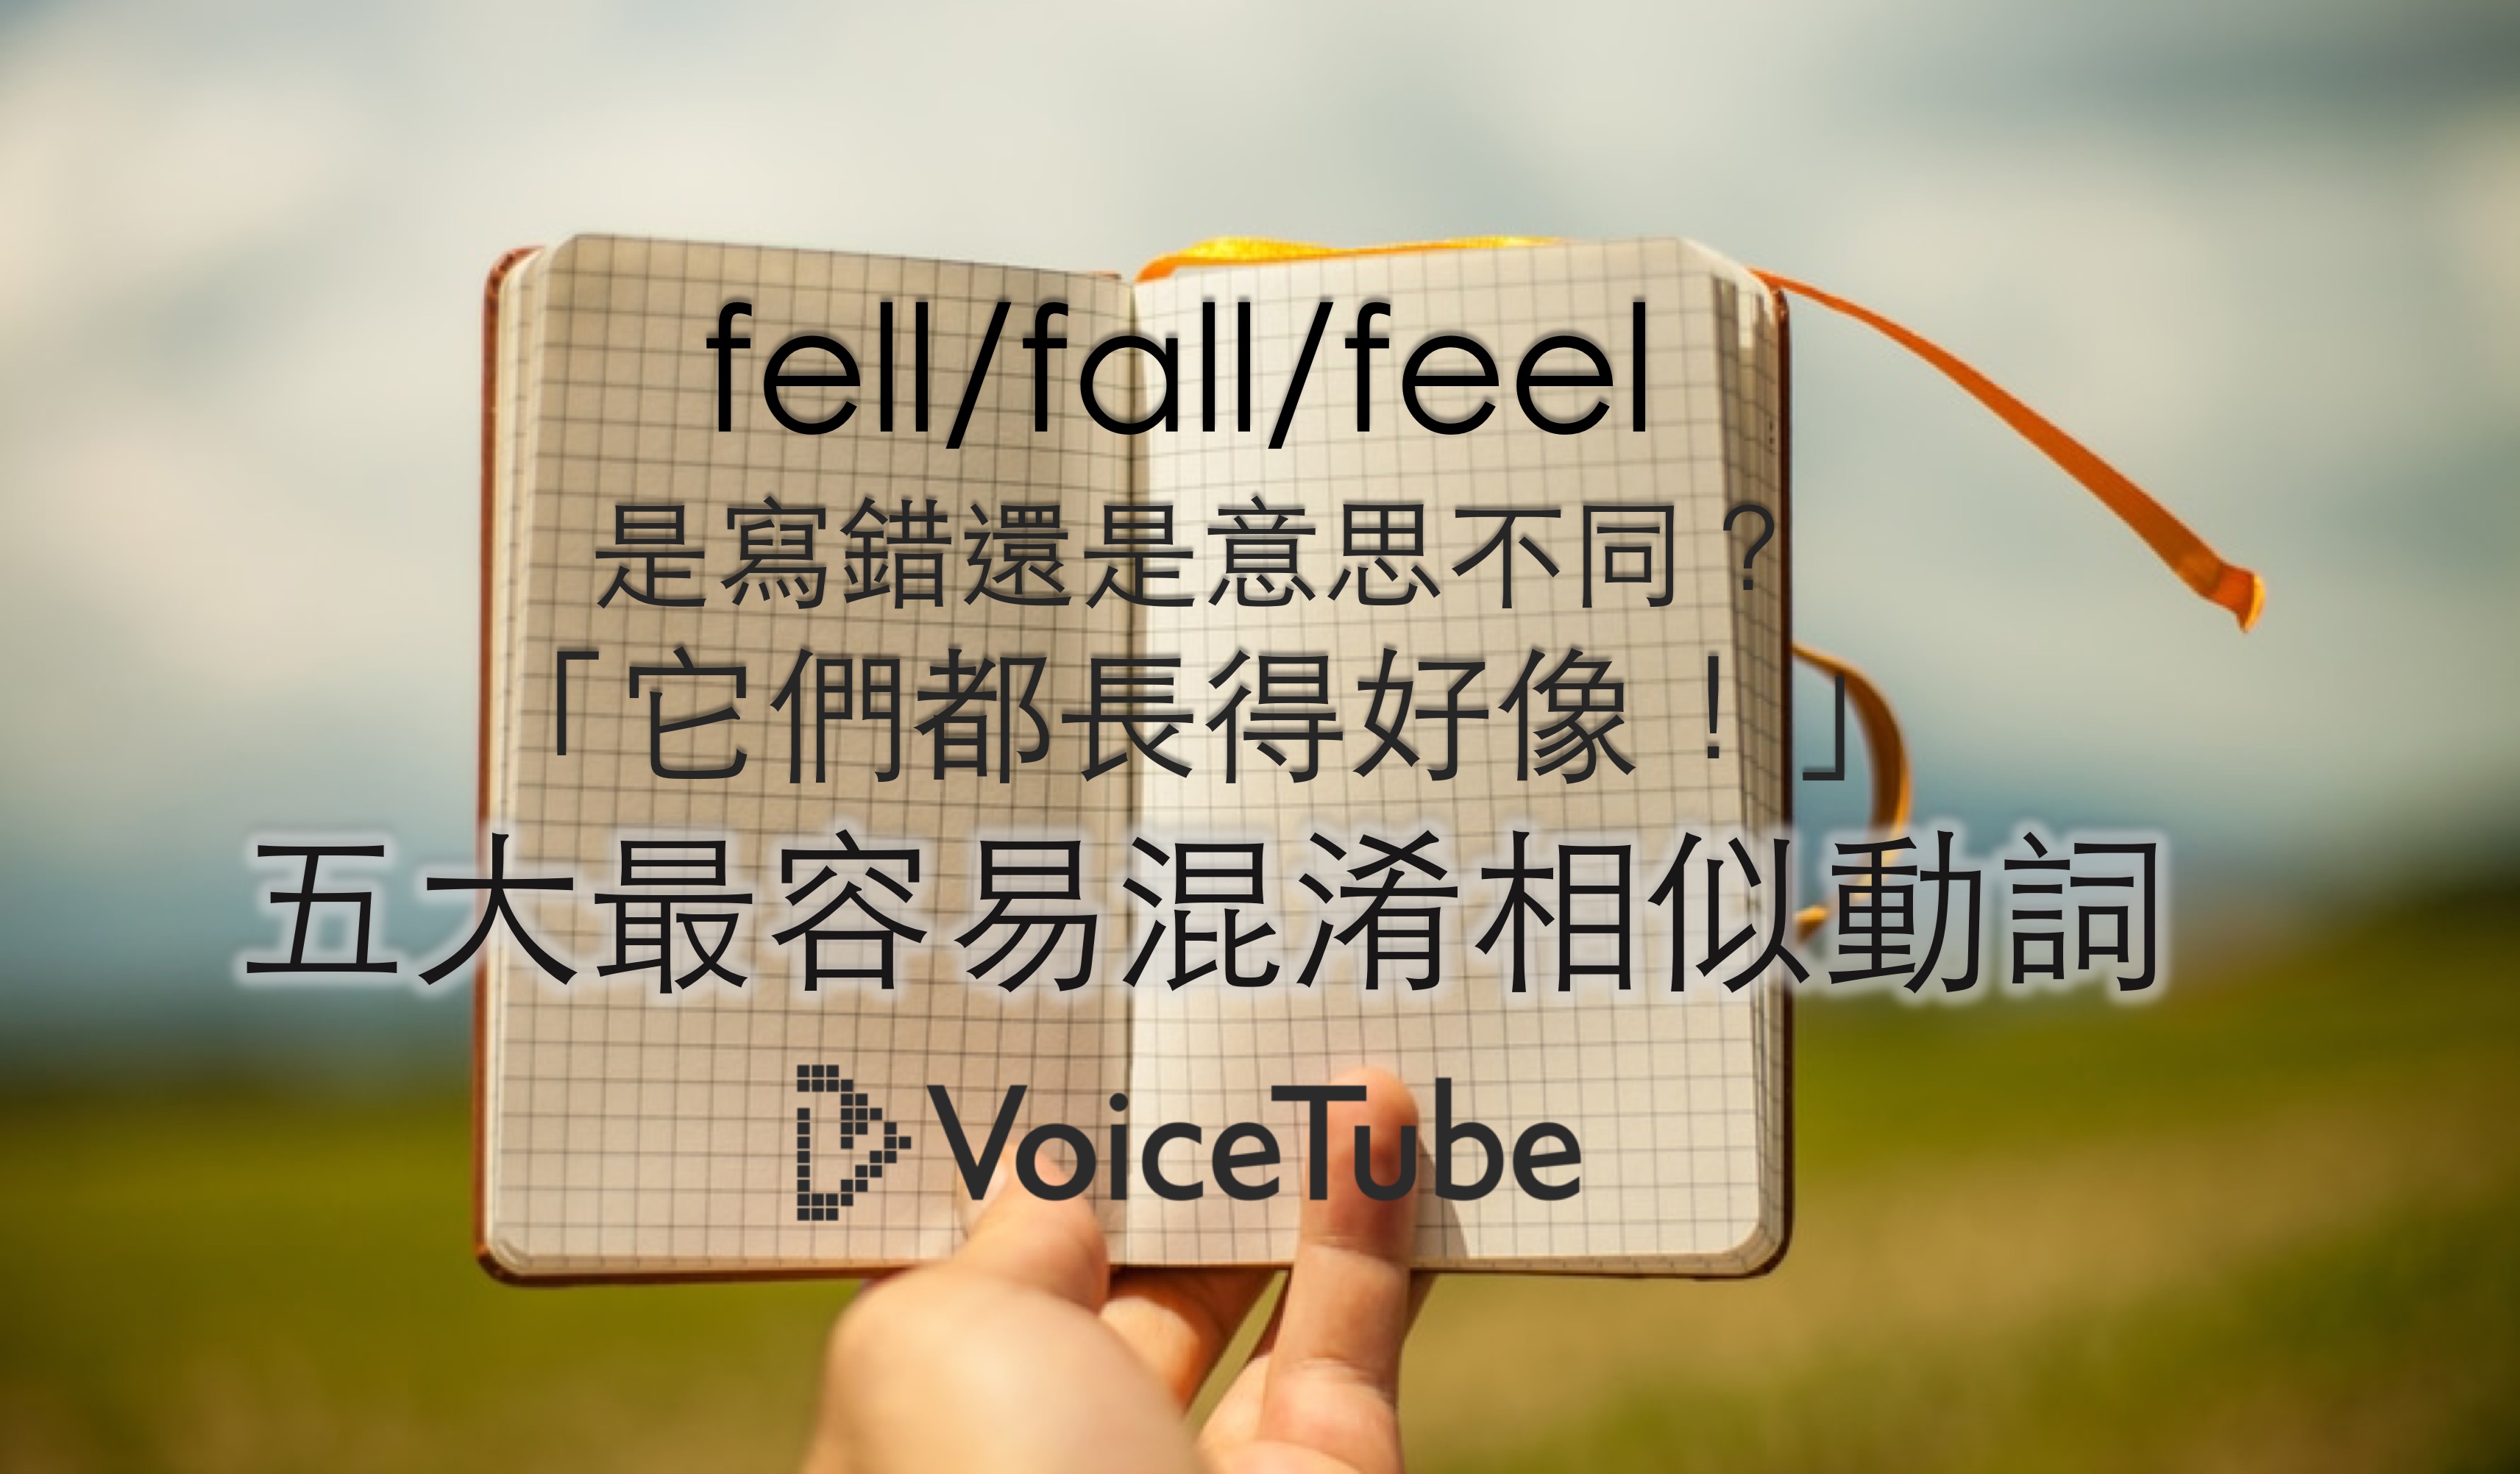 Feel Fell Fall Find Found Founded 咦 到底是錯字還是意思根本不一樣 超容易混淆的五組相似動詞